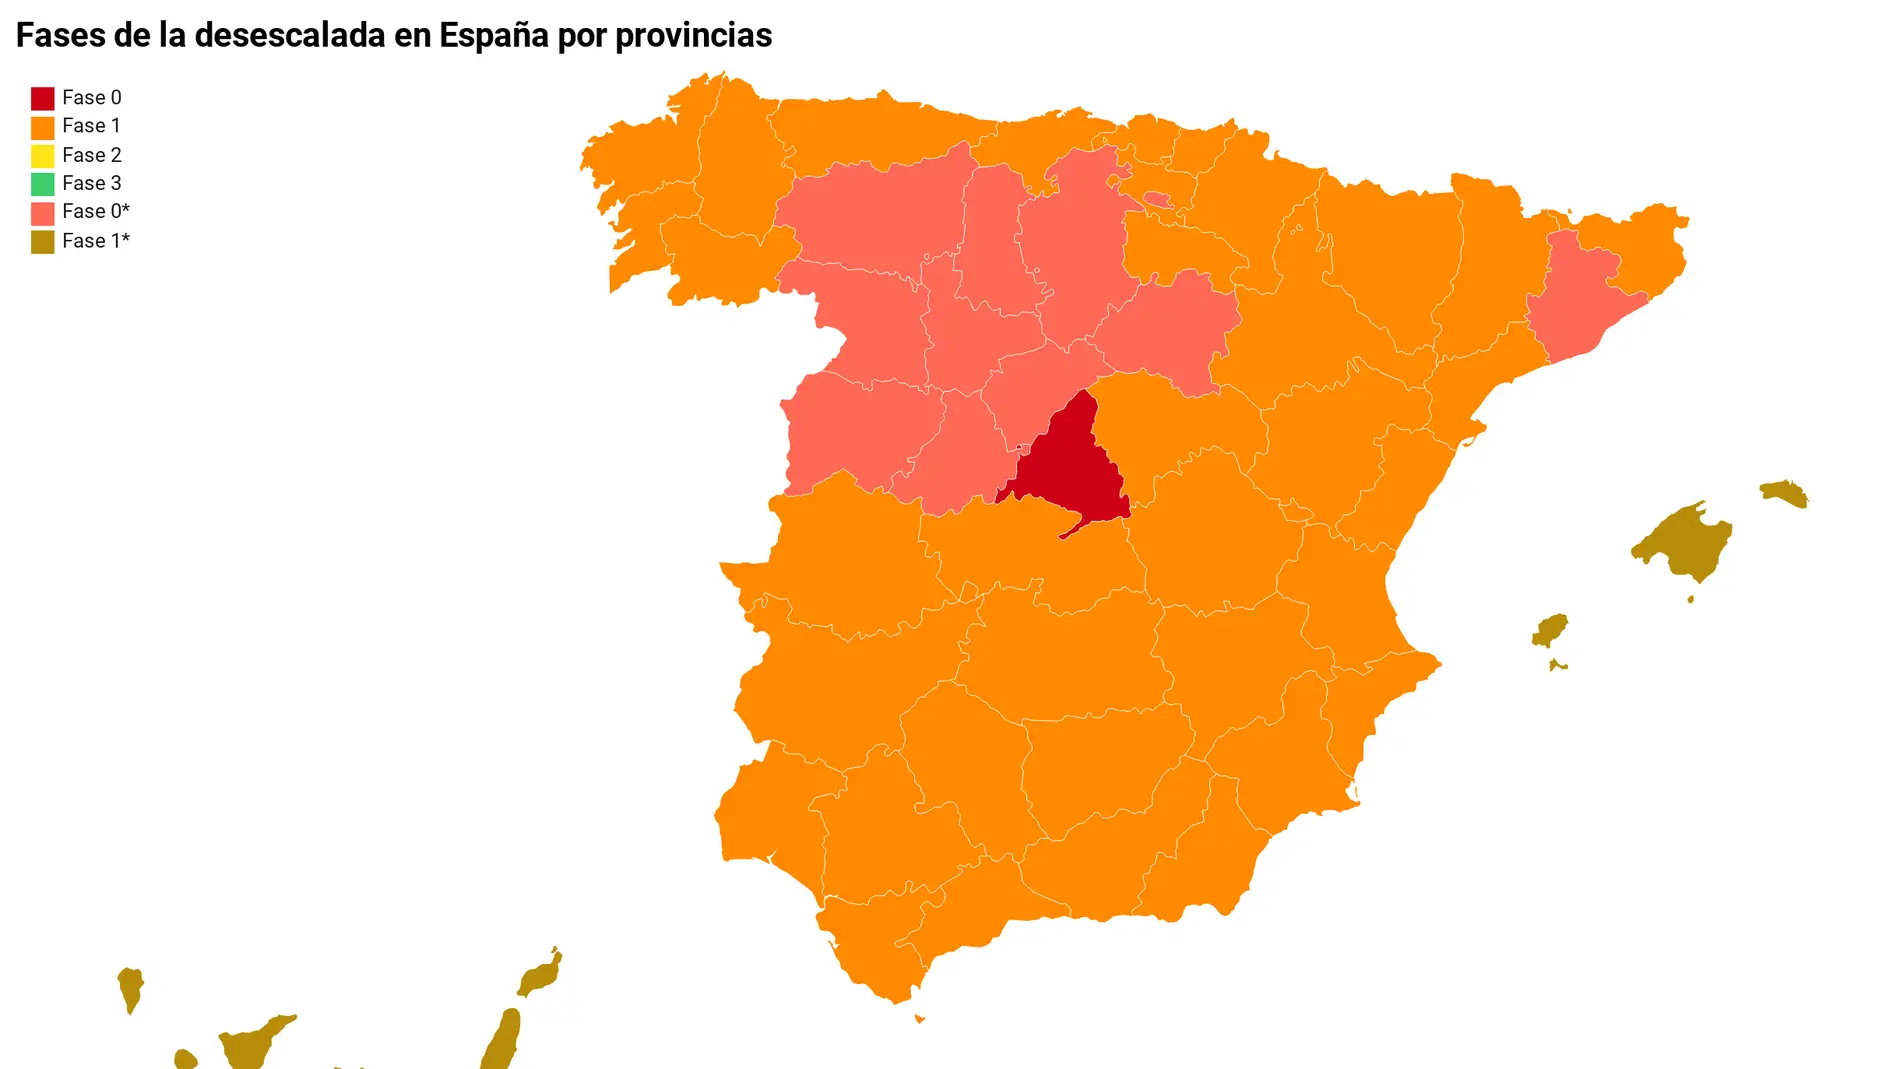 Fases de las desescalada en España por provincias